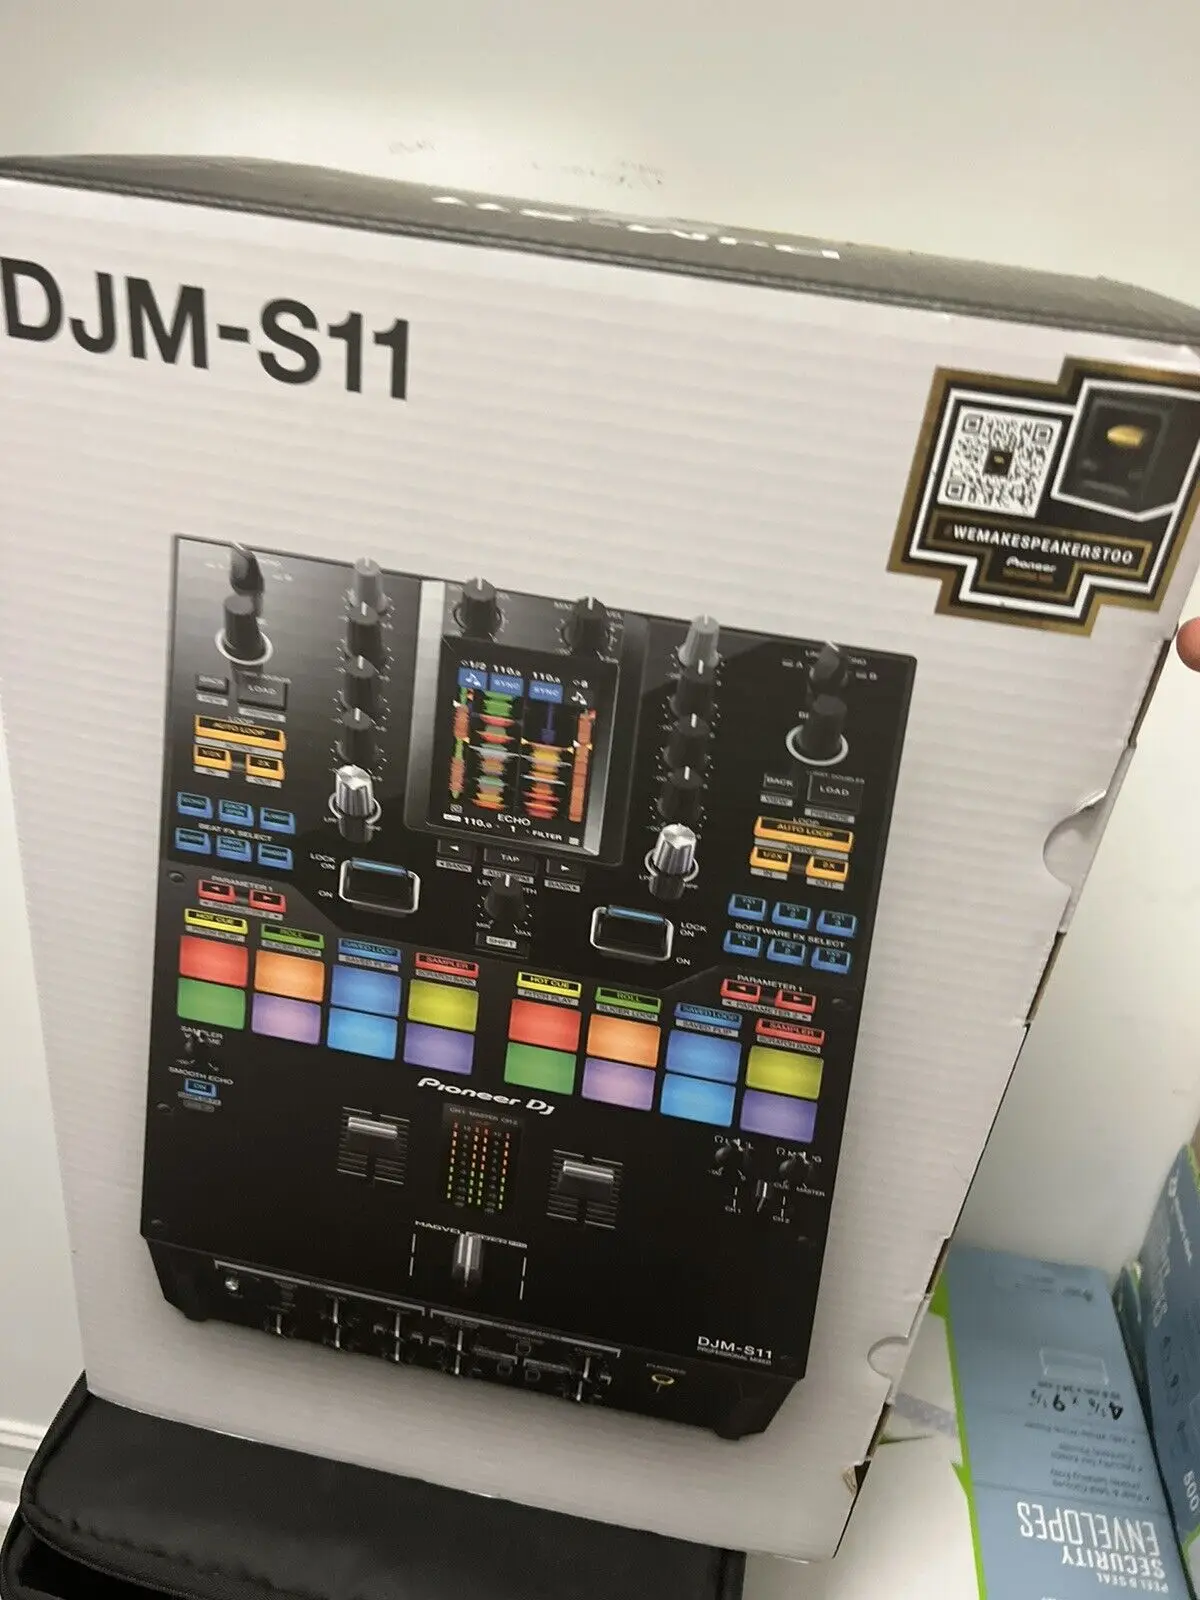 

100% SUMMER DISCOUNT SALES ON Pioneer DJ DJM-S11 2-channel Mixer for Serato DJ